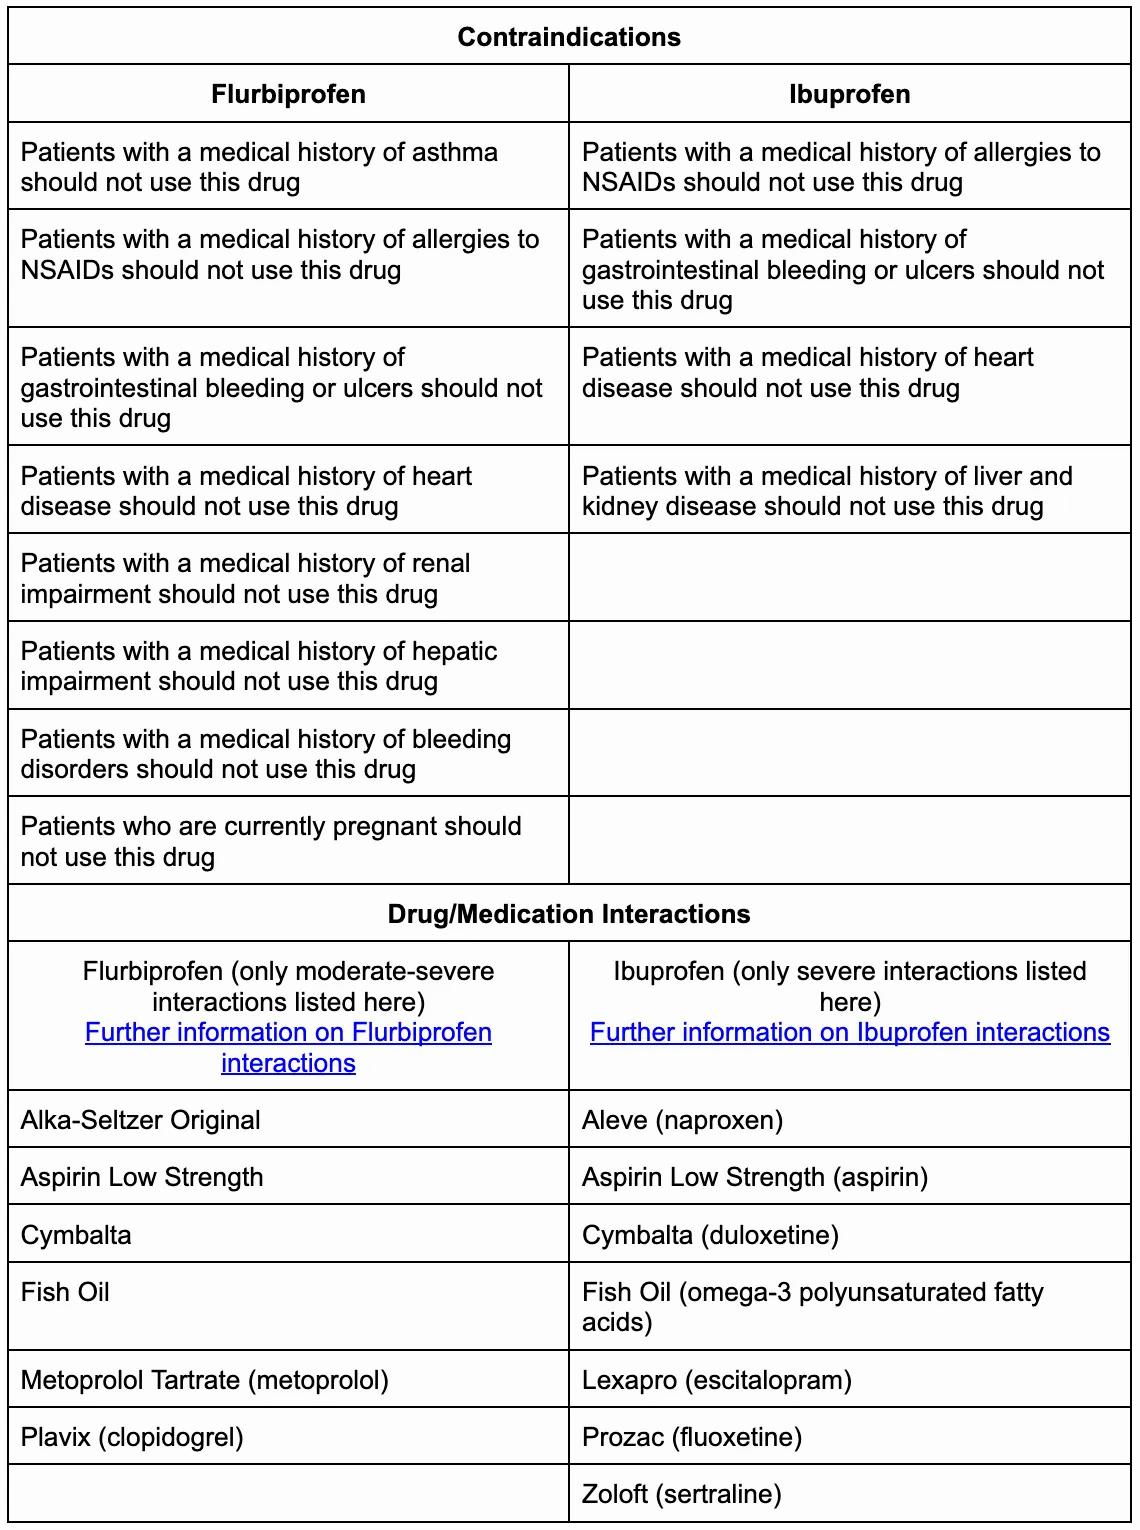 Contraindications and drug/medication interactions for flurbiprofen and ibuprofen.